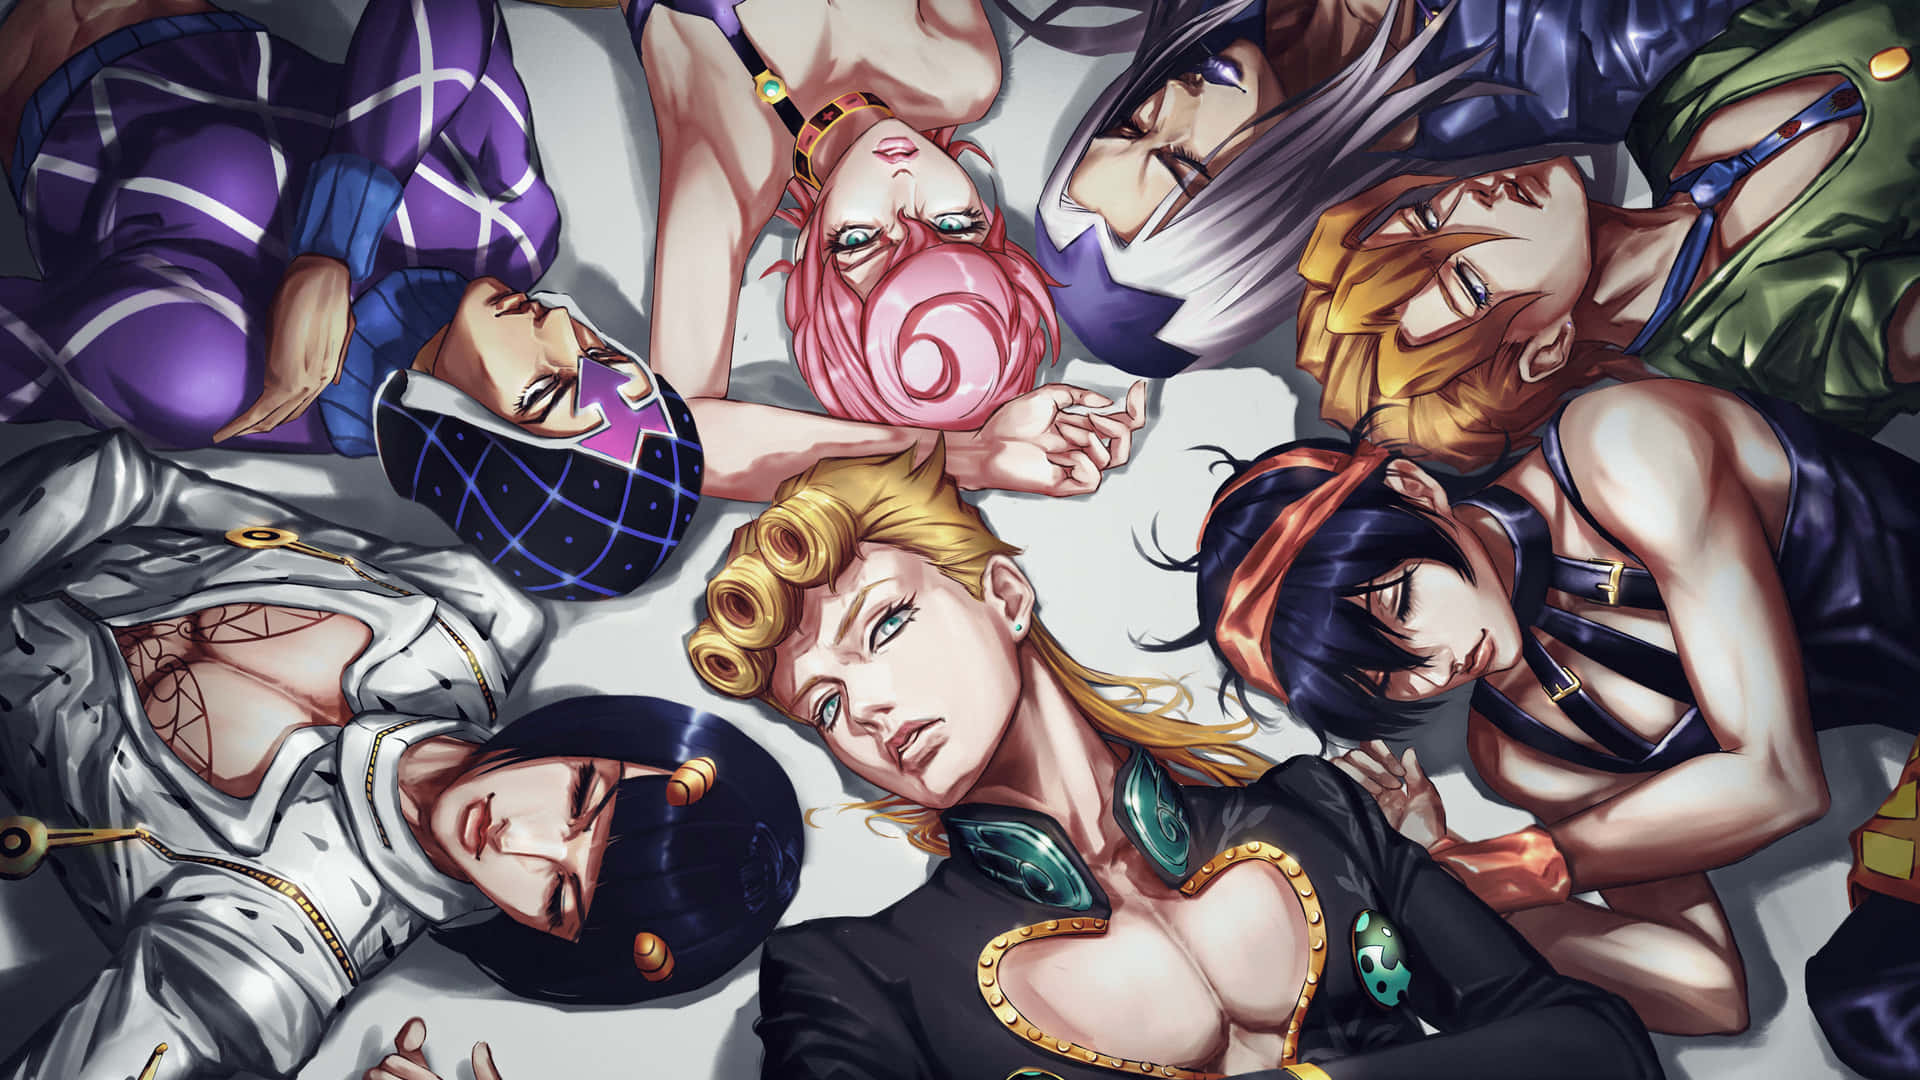 Vento Aureo Characters Unite in Vibrant 4K Artwork Wallpaper